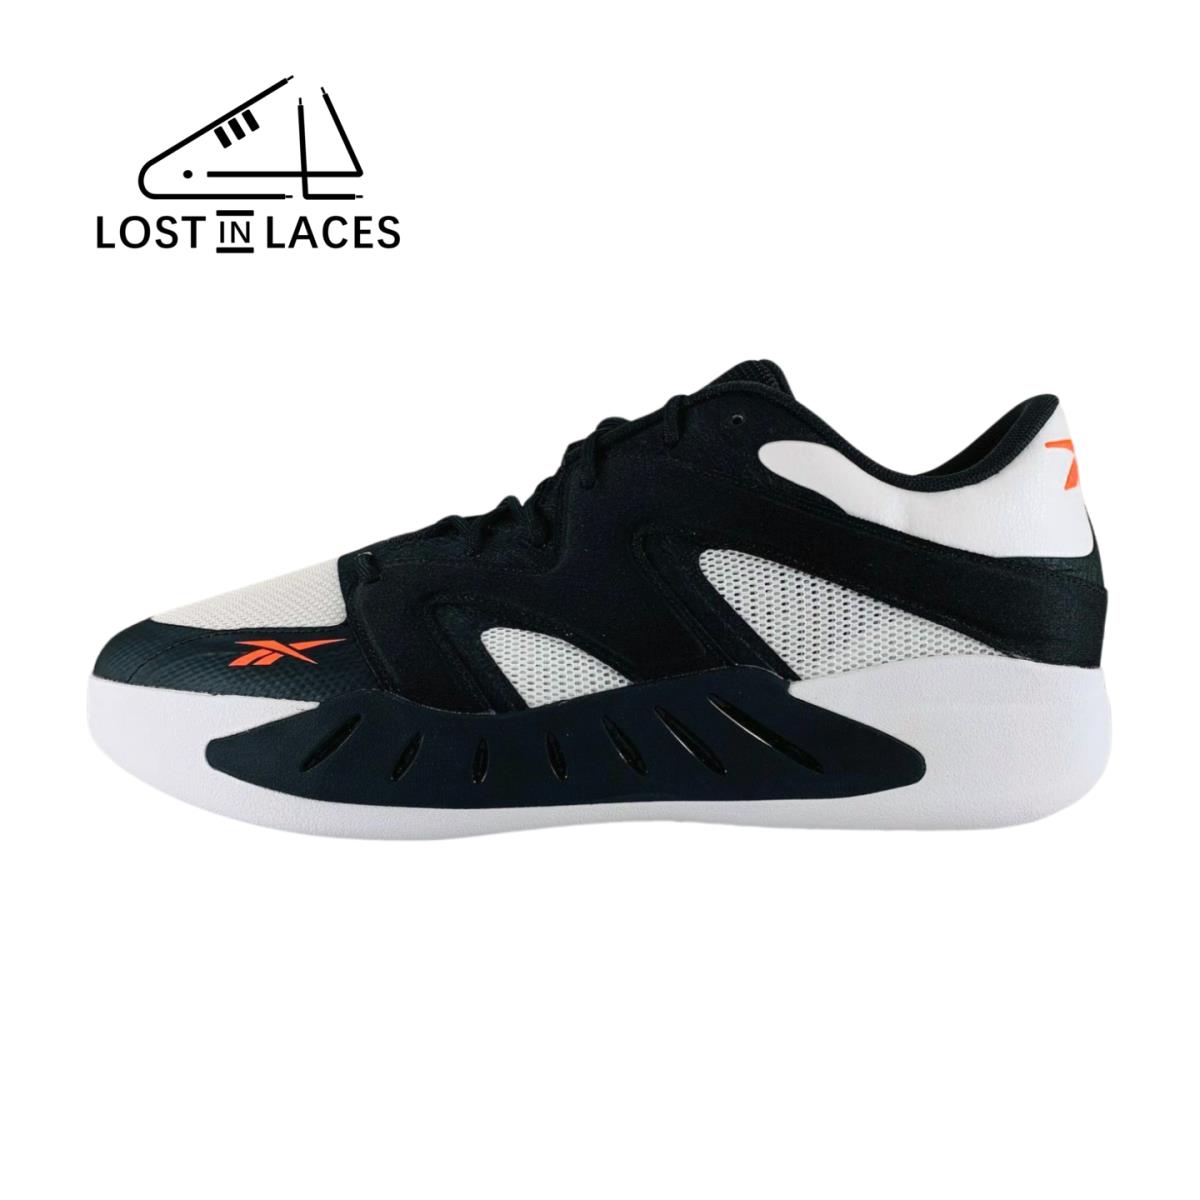 Reebok Fury Zone Low Black White Sneakers Basketball Shoes Men`s Sizes